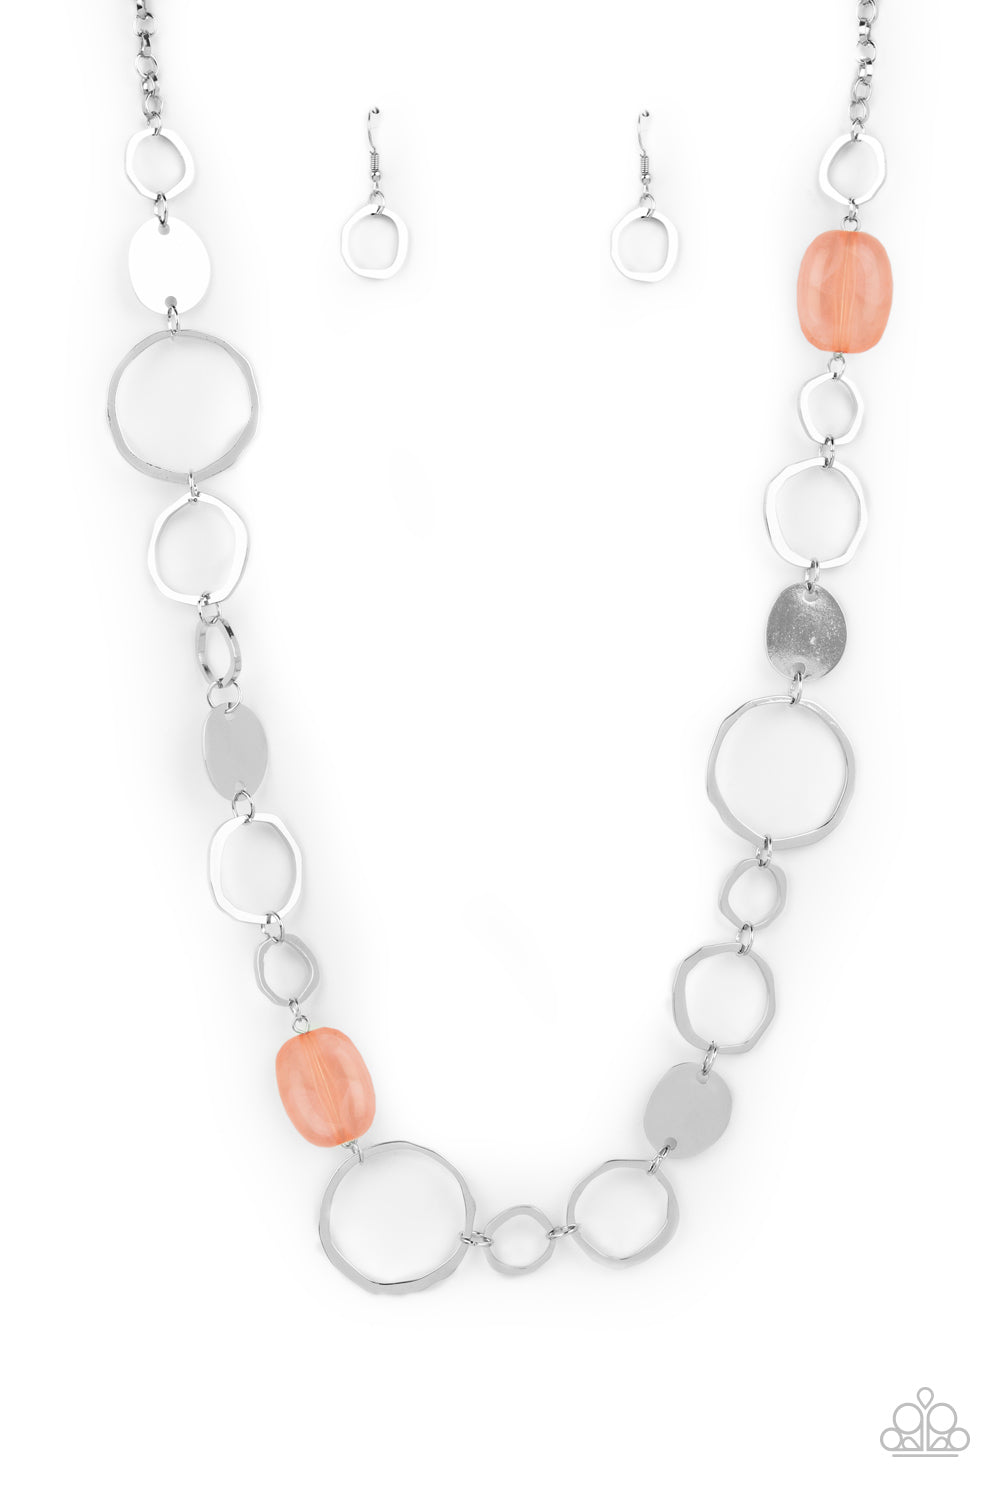 Colorful Combo Orange
Necklace - Daria's Blings N Things